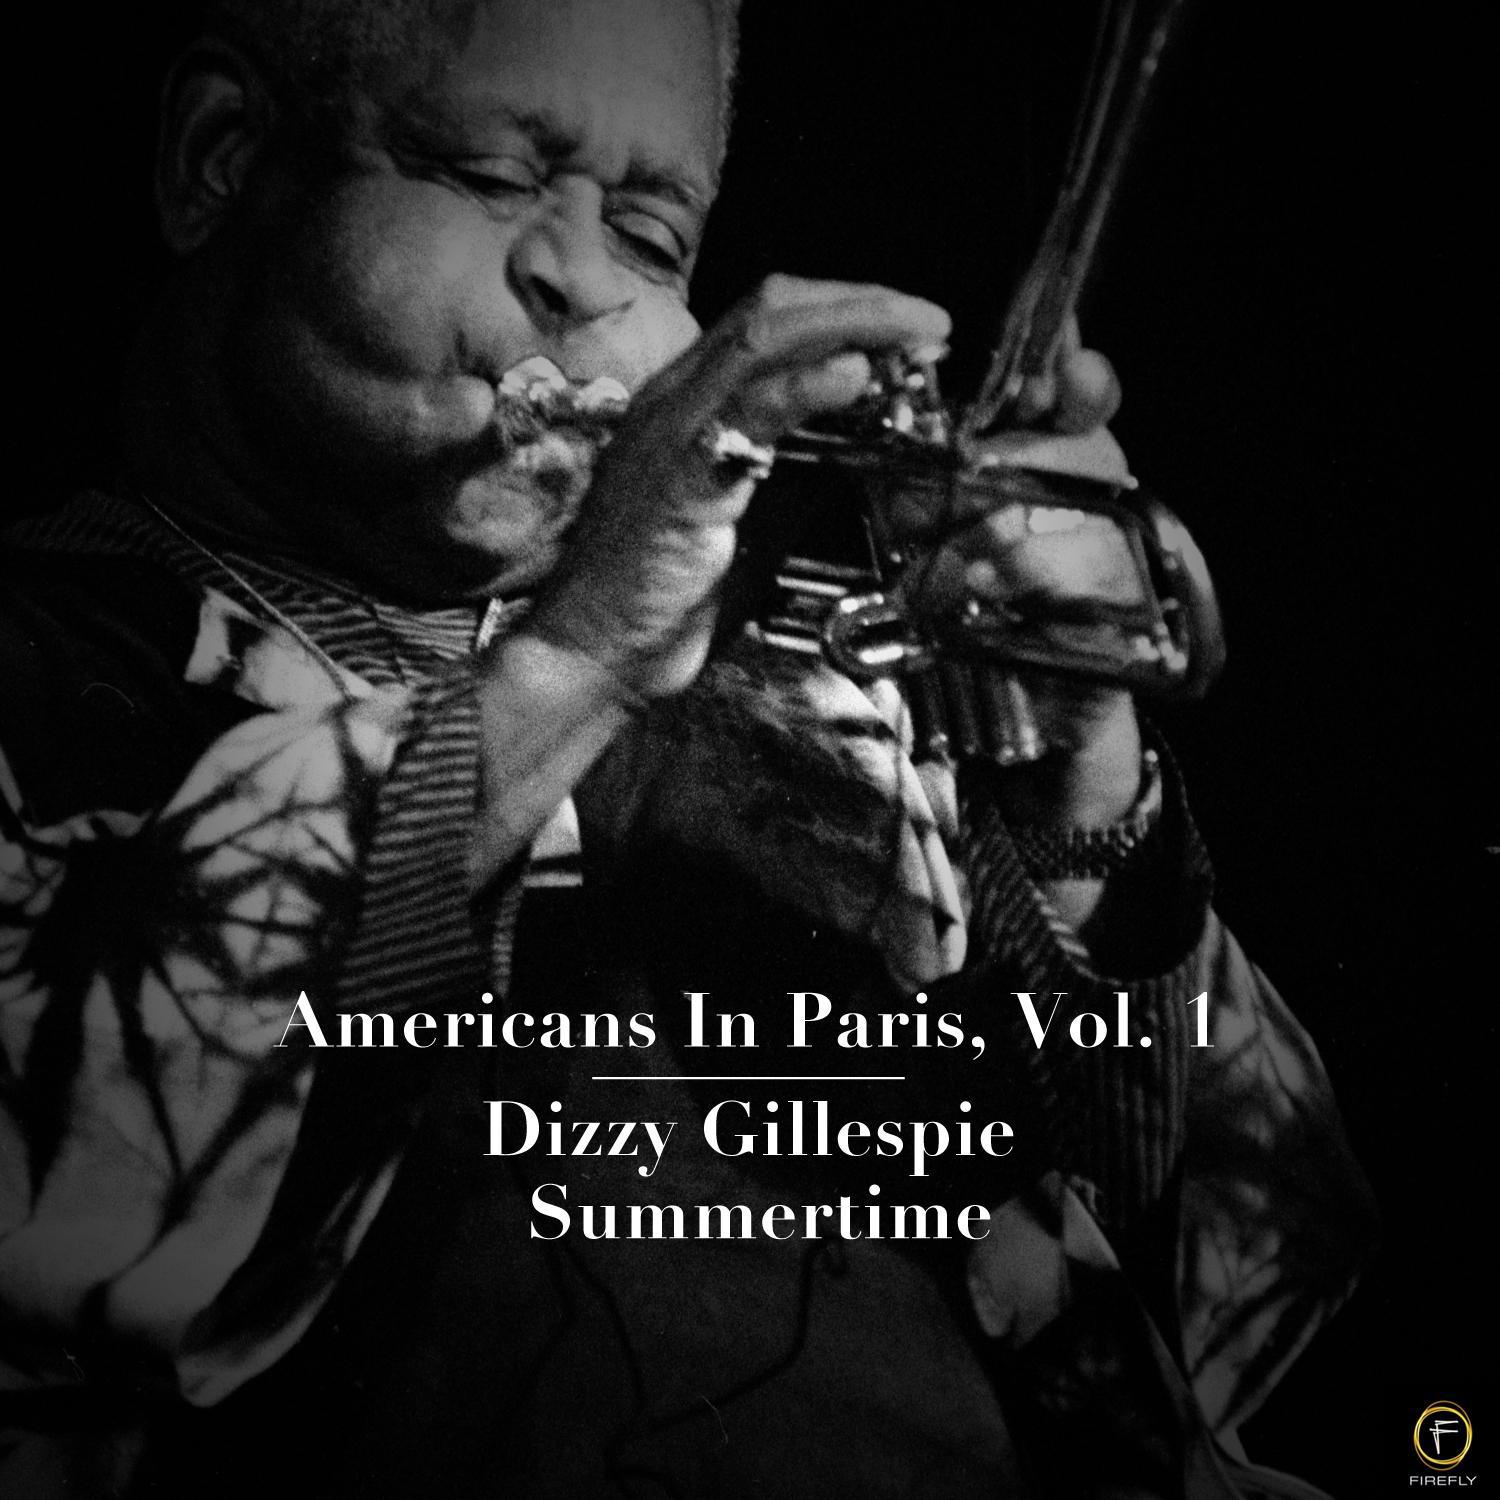 Americans in Paris, Vol. 1: Dizzy Gillespie - Summertime